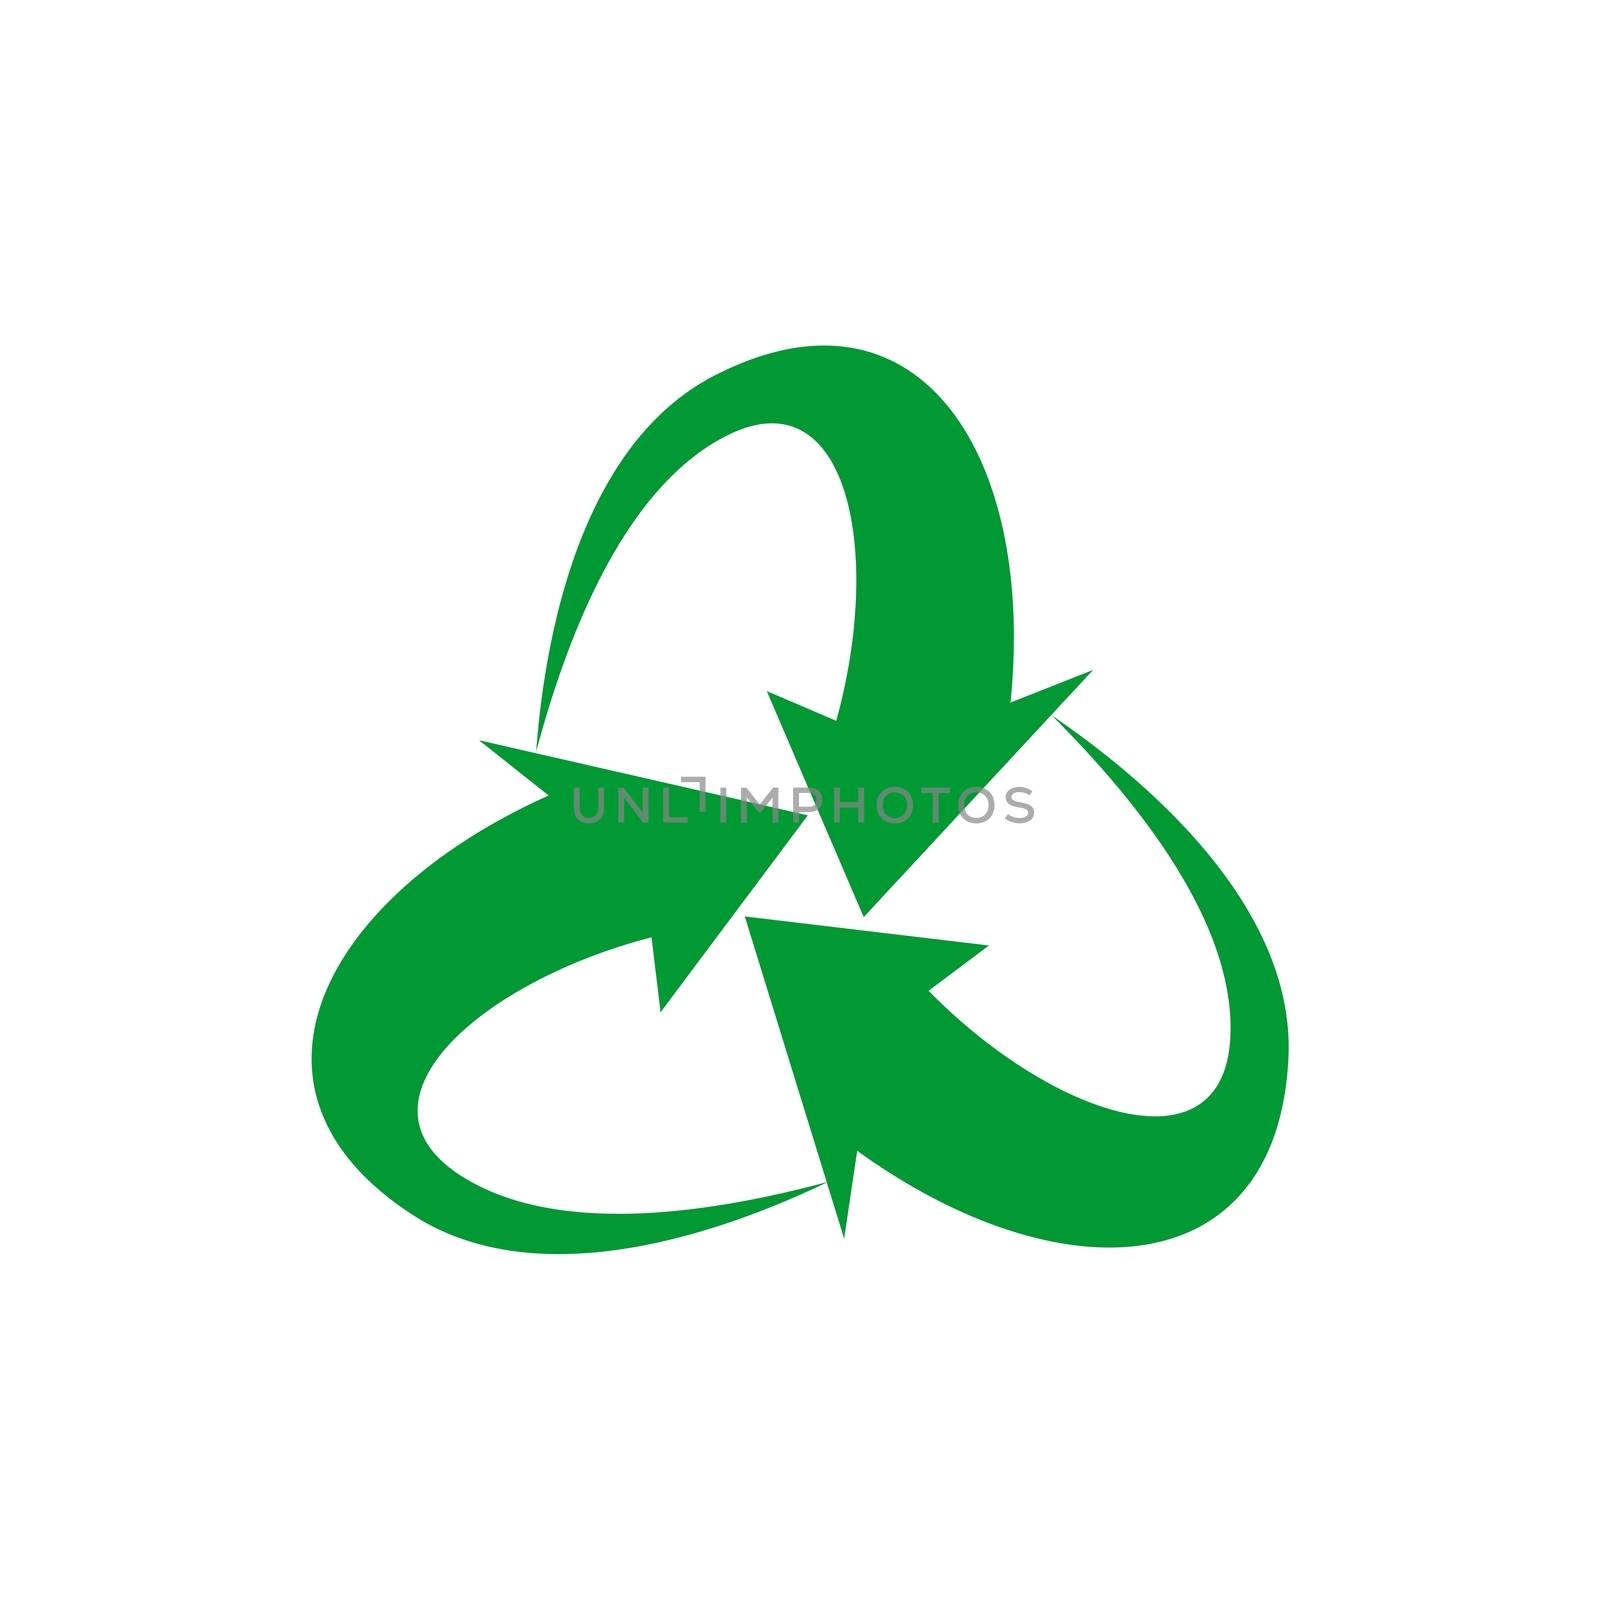 Green Recycle Arrow Logo Template Illustration Design. Vector EPS 10.